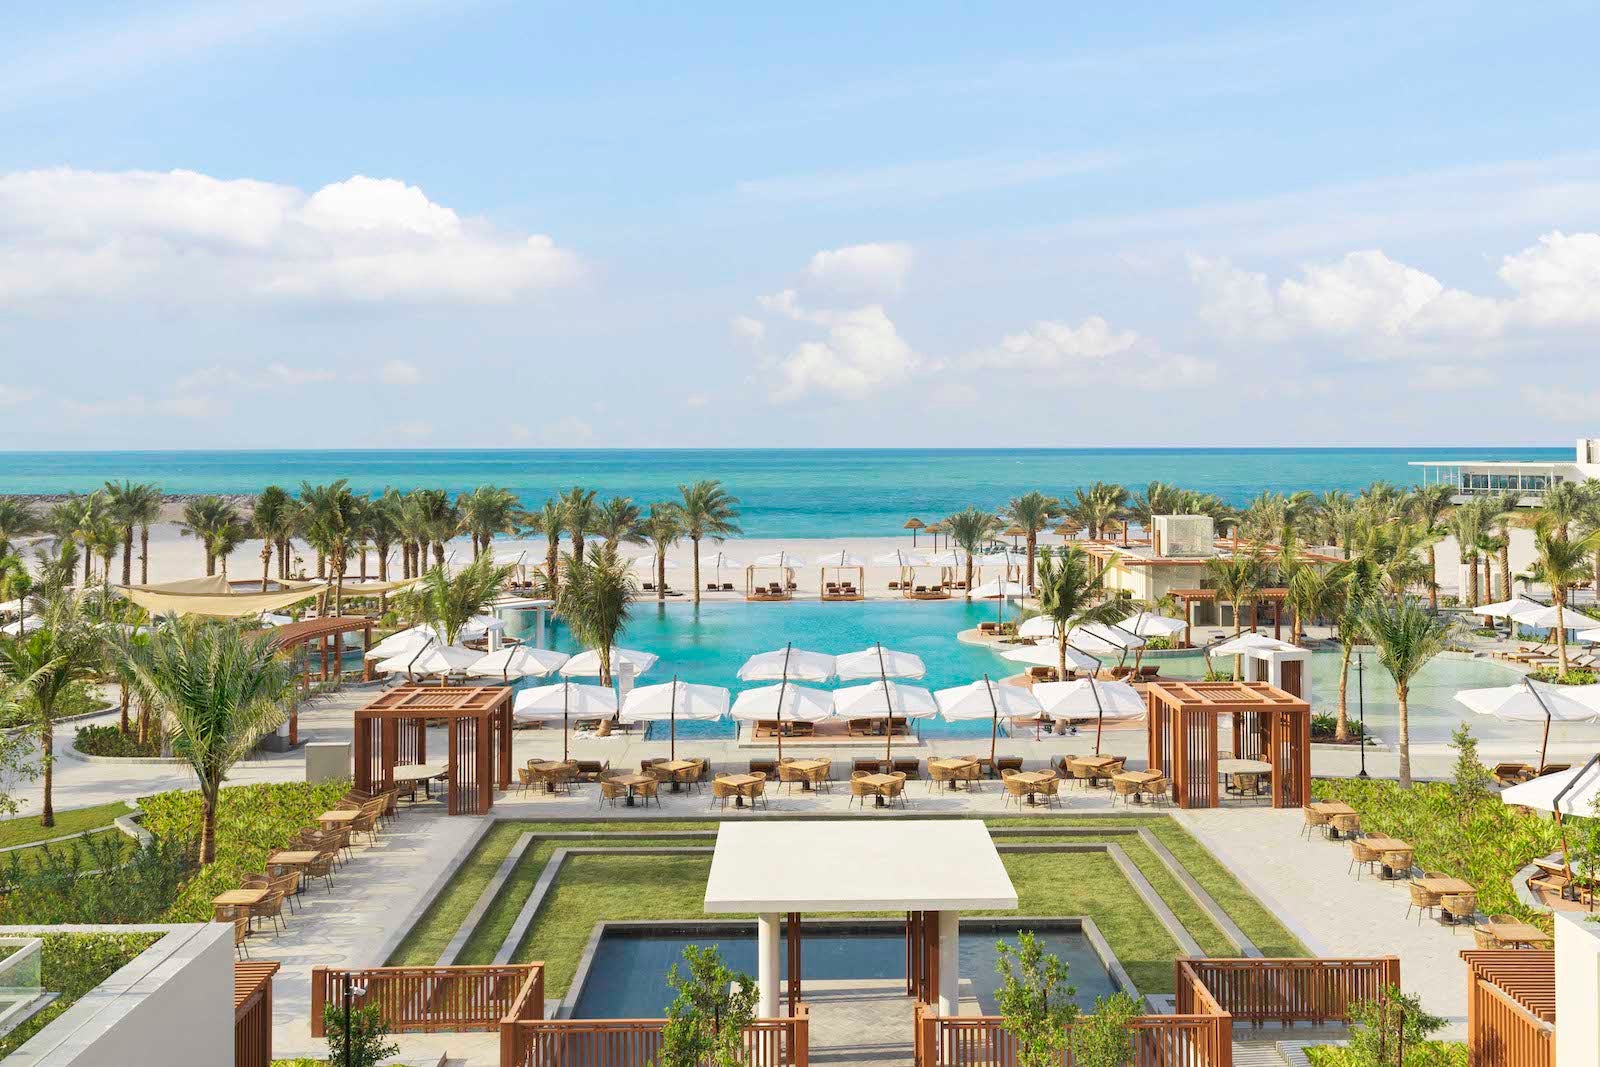 The InterContinental Ras Al Khaimah Mina Al Arab Trip resort & Spa is now open